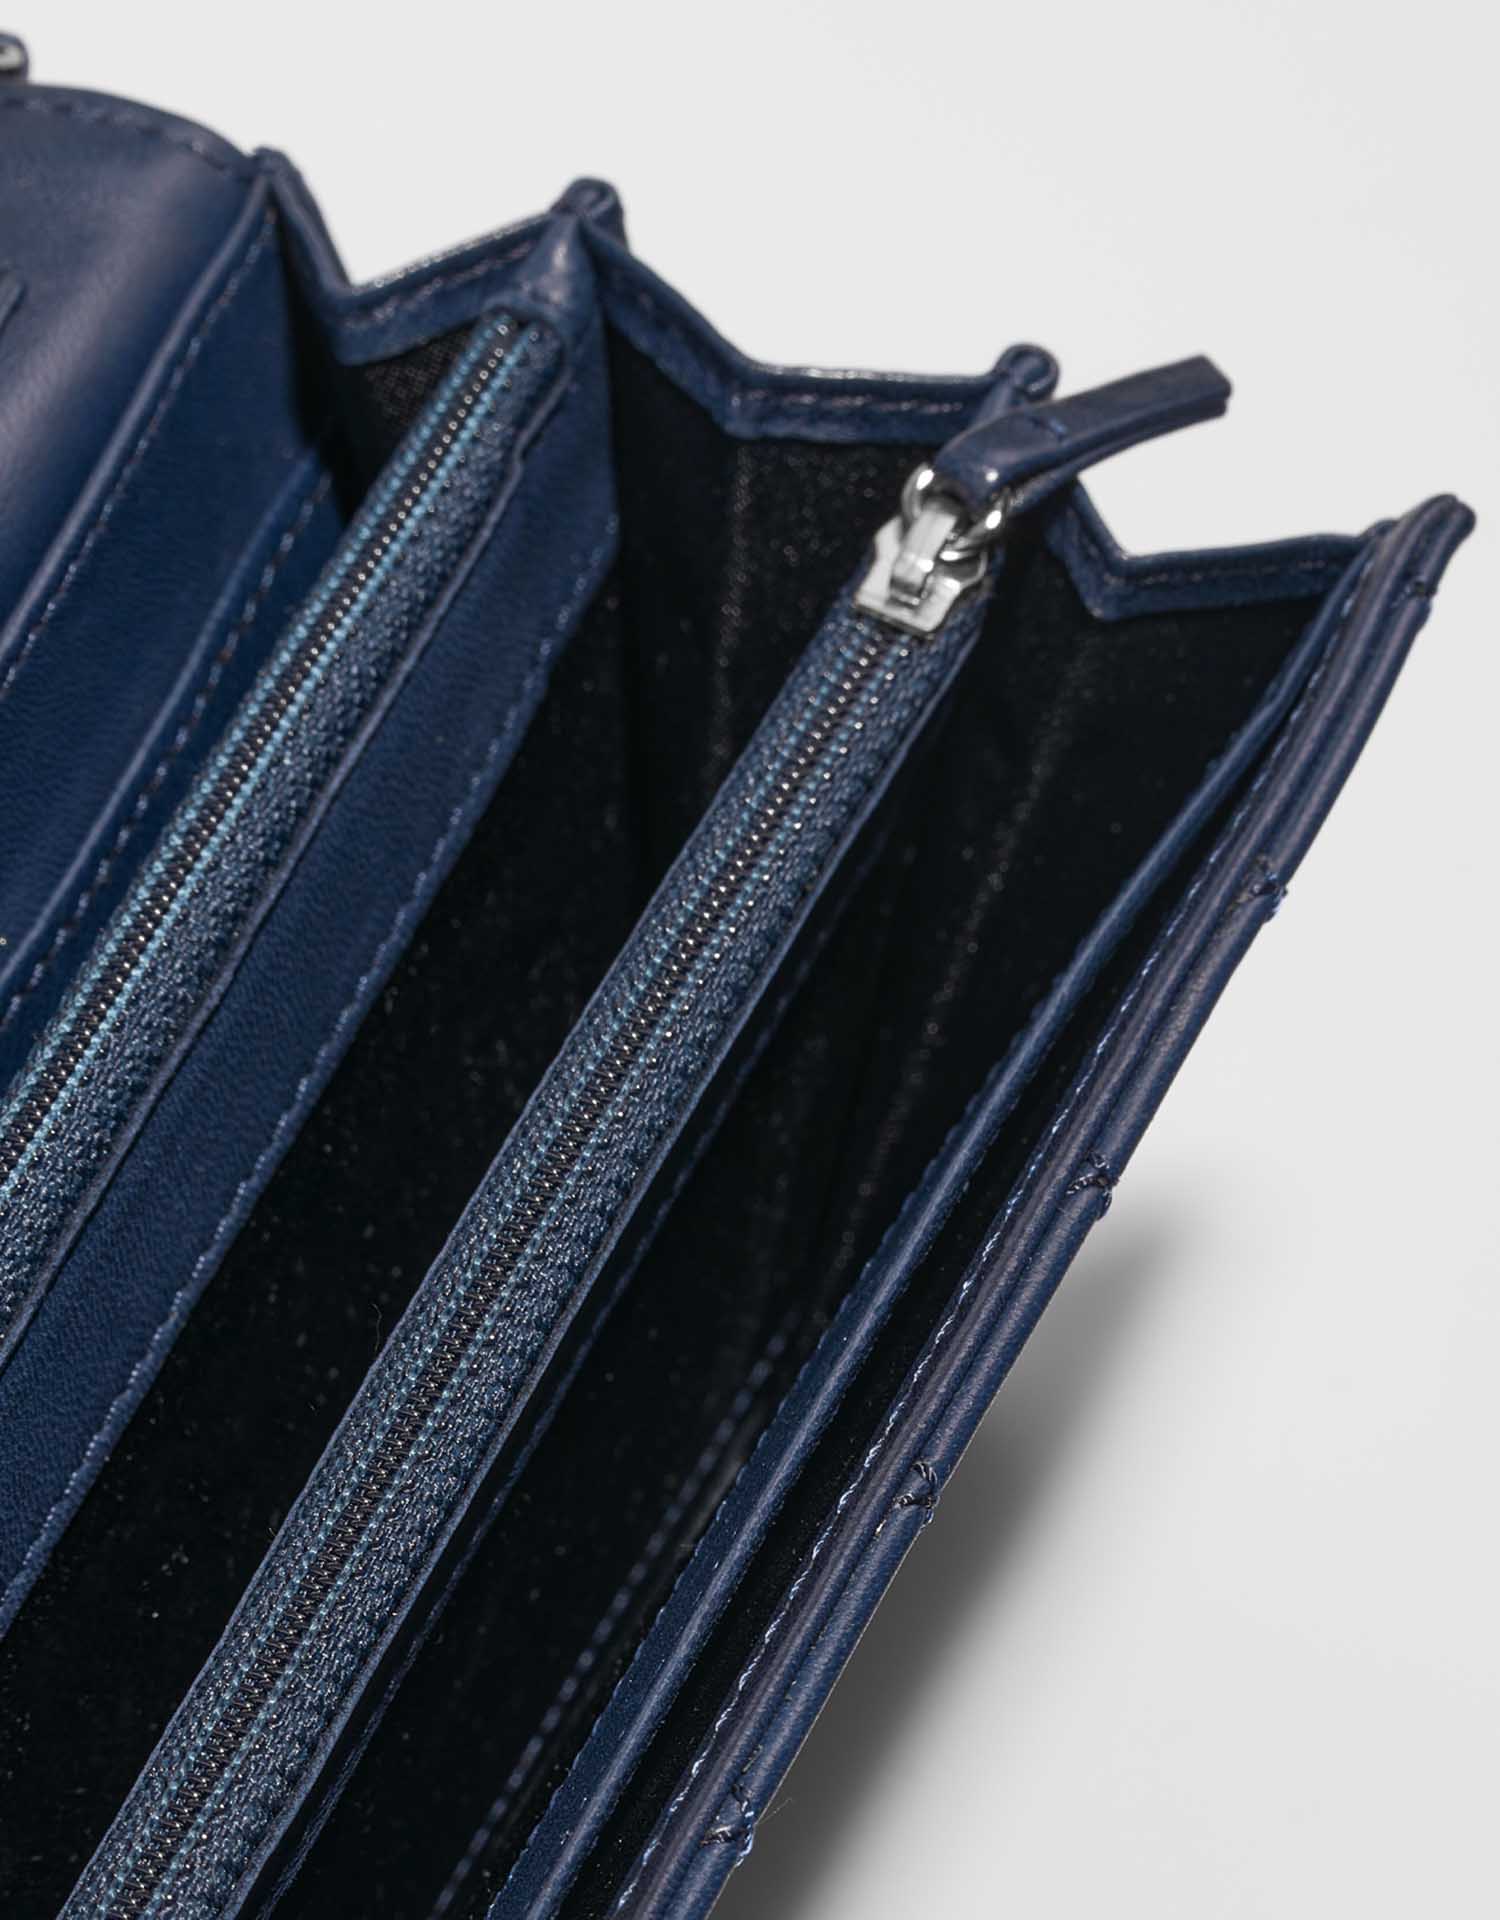 Chanel Timeless Medium DarkBlue signs of wear | Sell your designer bag on Saclab.com